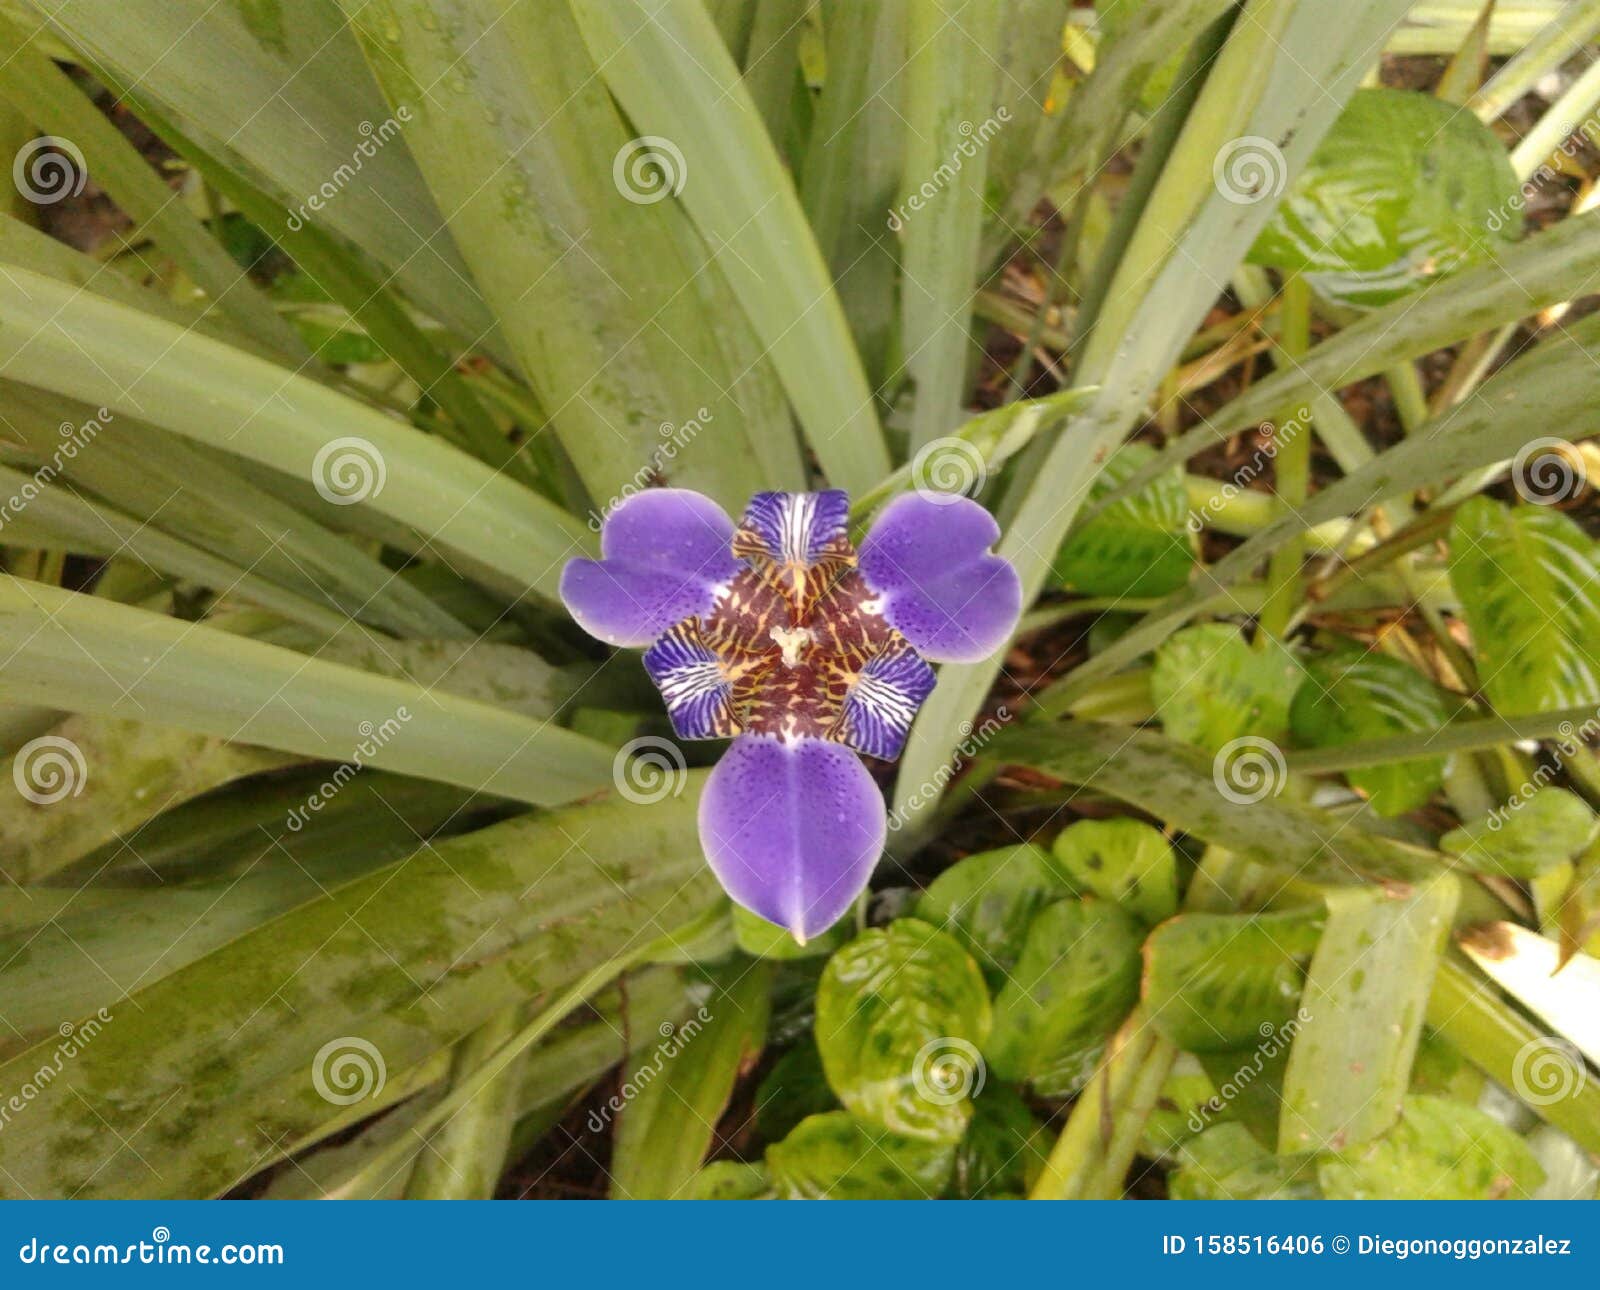 purple trimezia flower - walking iris - nature - garden - plants